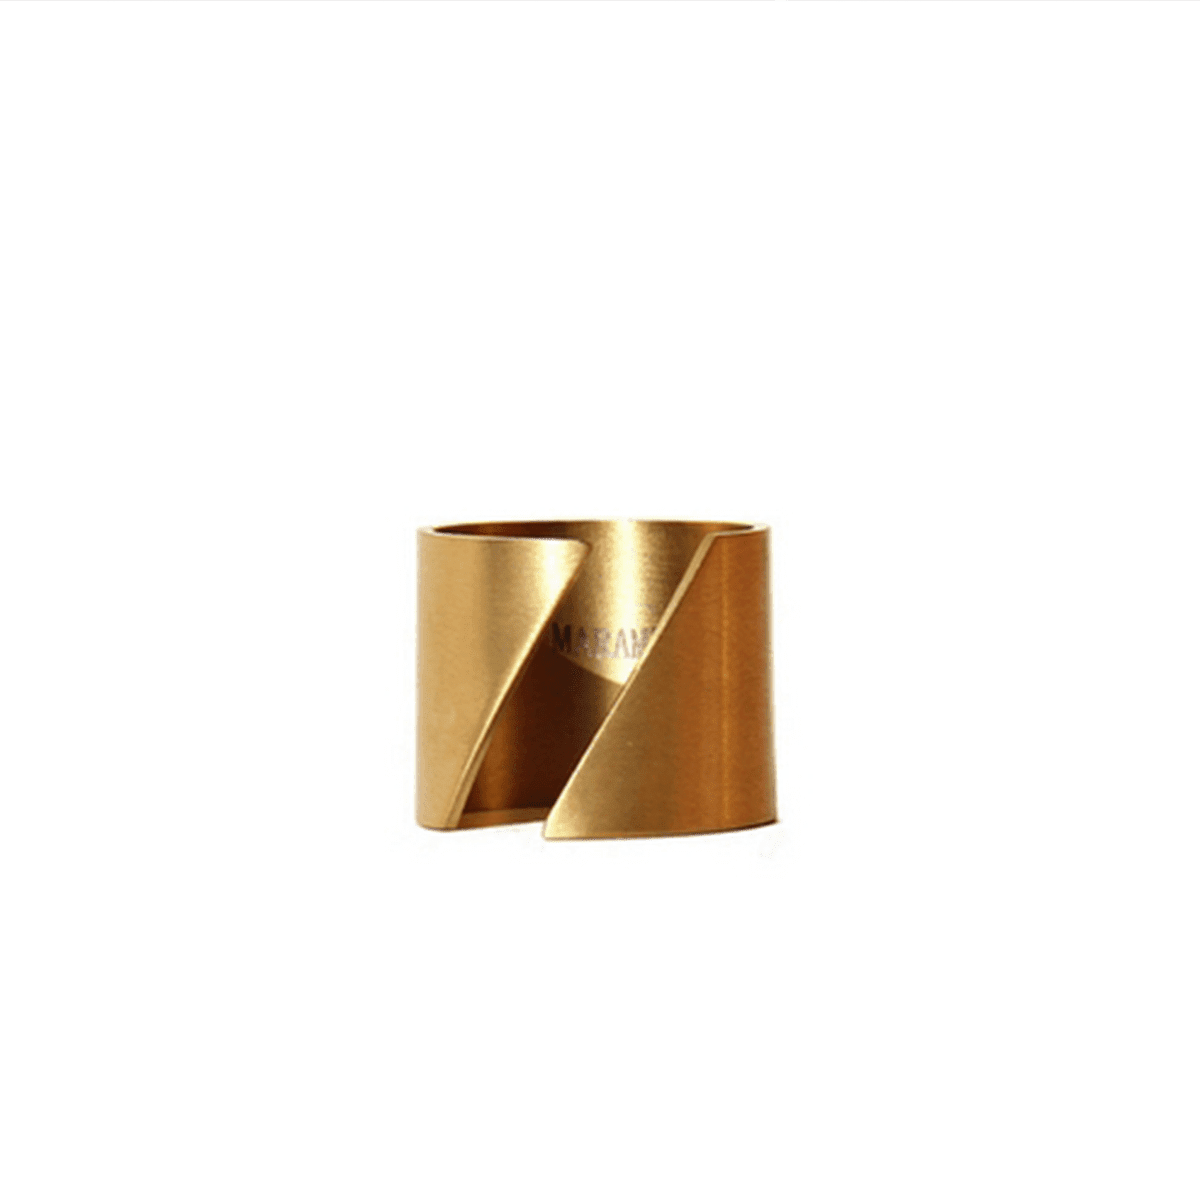 Handmade 18k Gold Plated Diagonal Open End Adjustable Ring